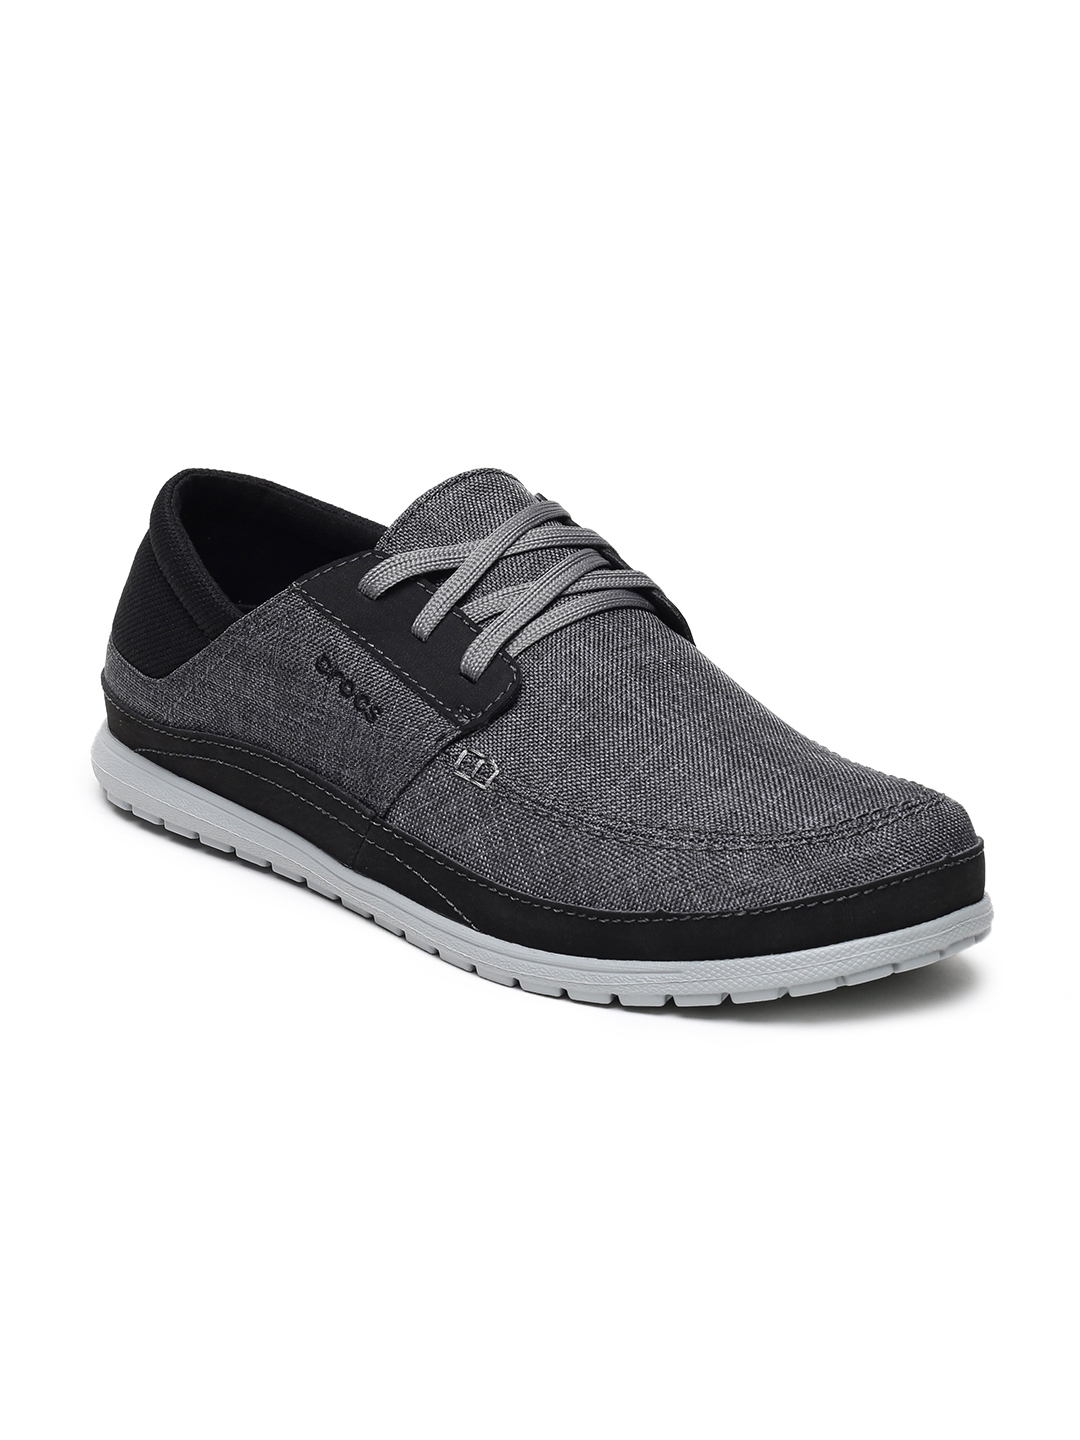 Buy Crocs Men Grey Sneakers - Casual Shoes for Men 6516504 | Myntra